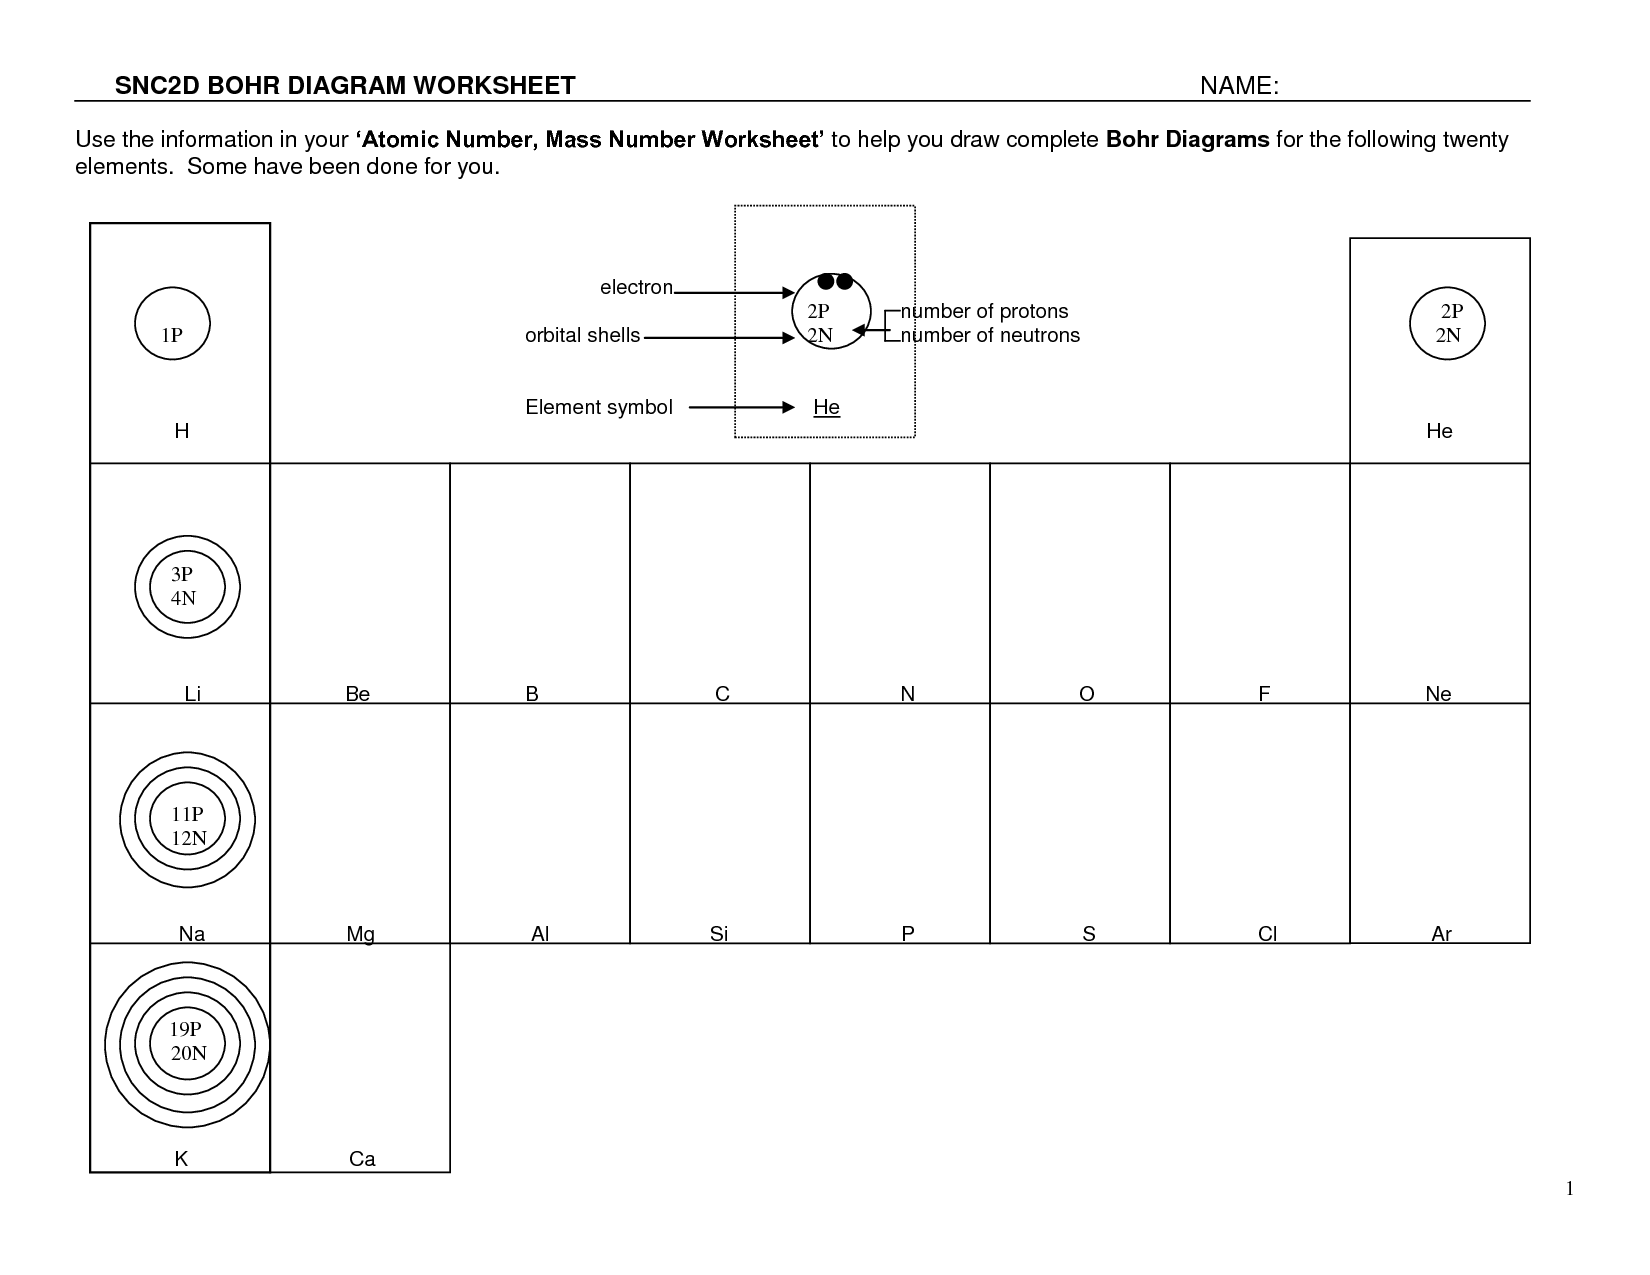 Bohr Model Worksheet Answers